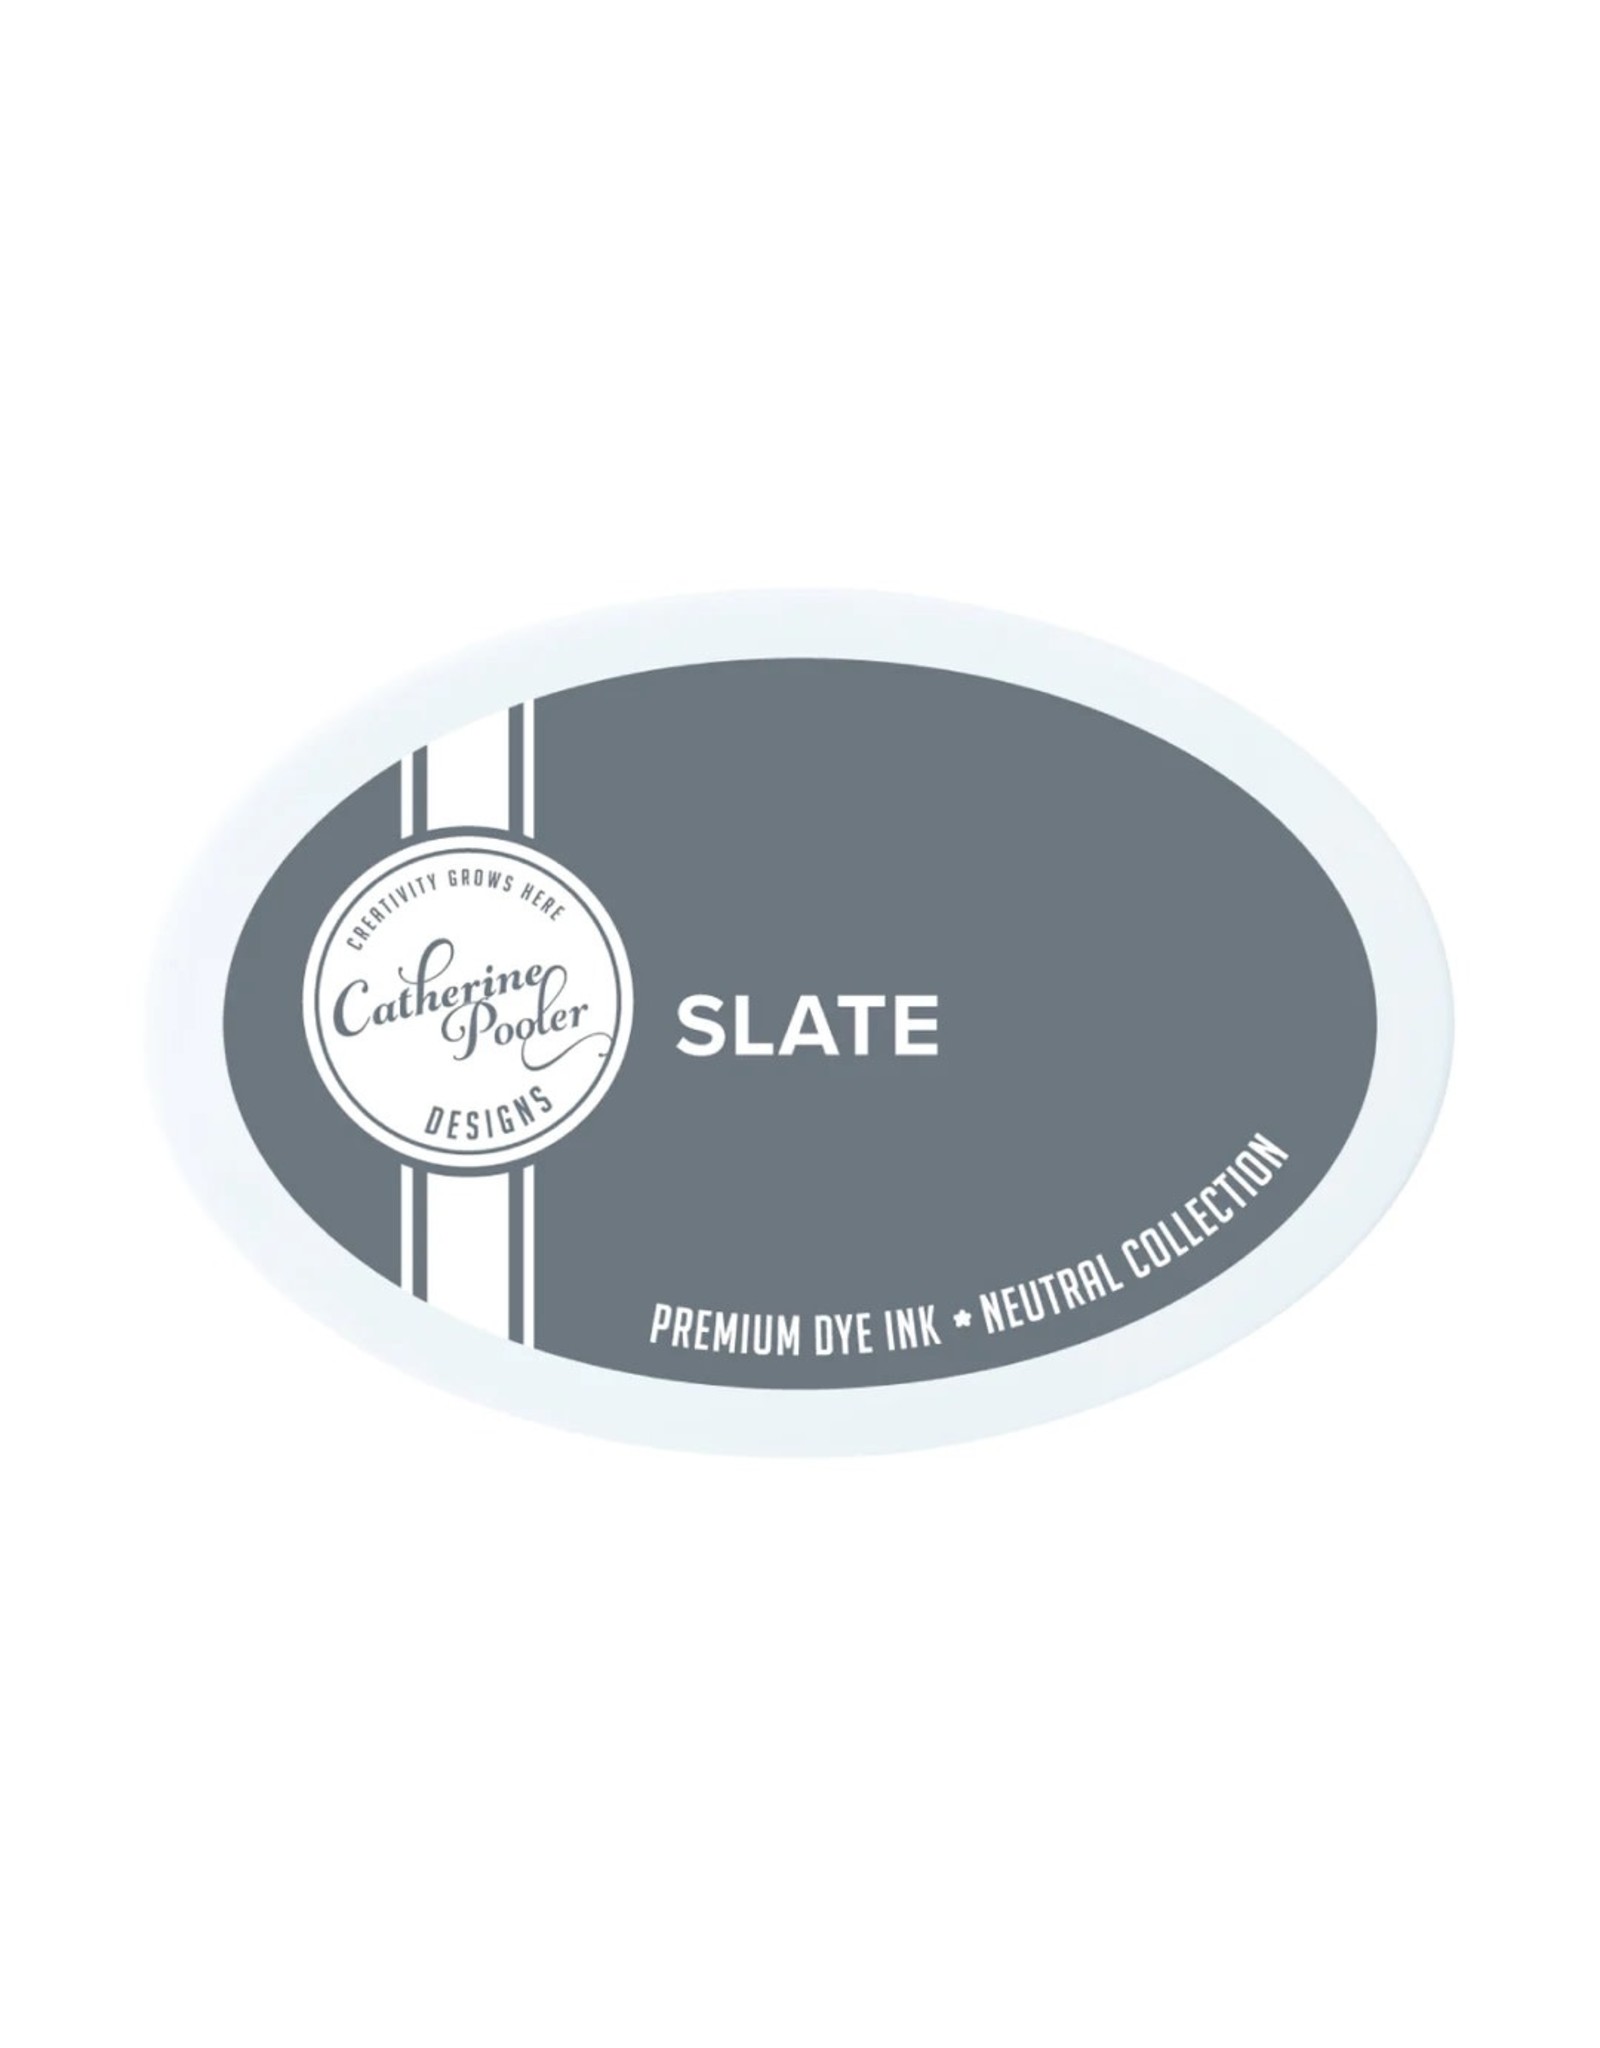 Catherine Pooler Designs Slate Ink Pad